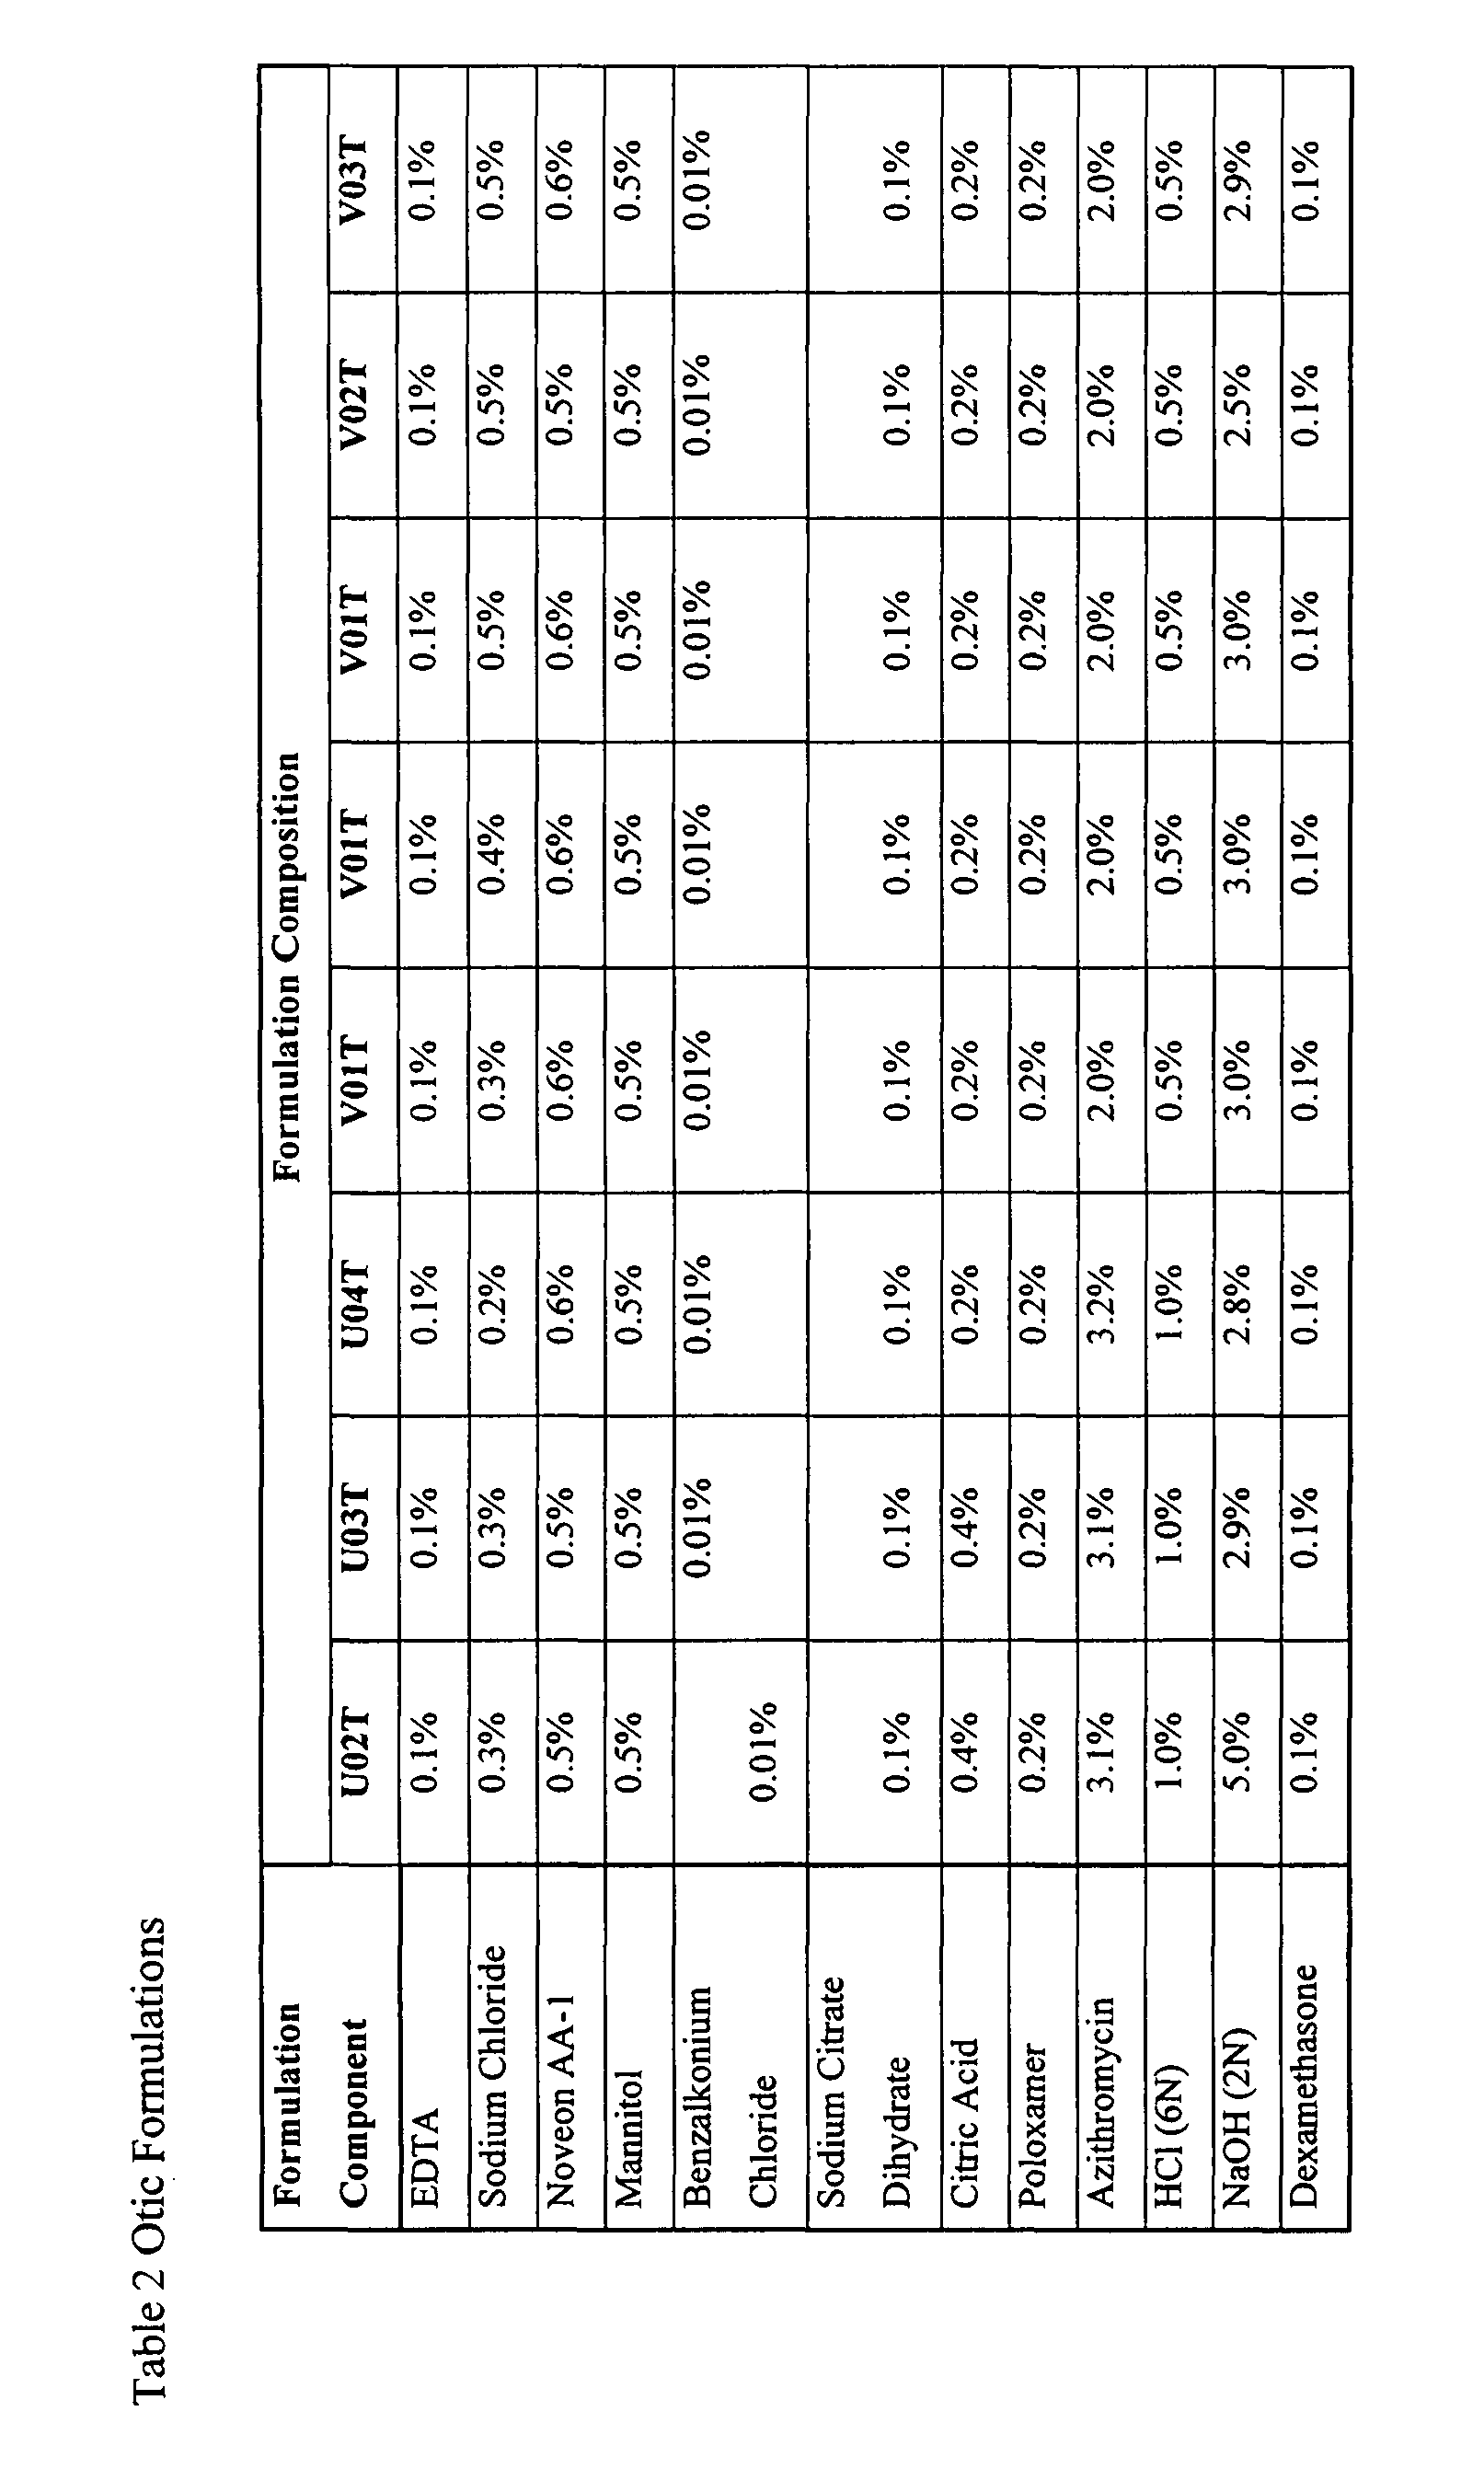 Concentrated aqueous azalide formulations